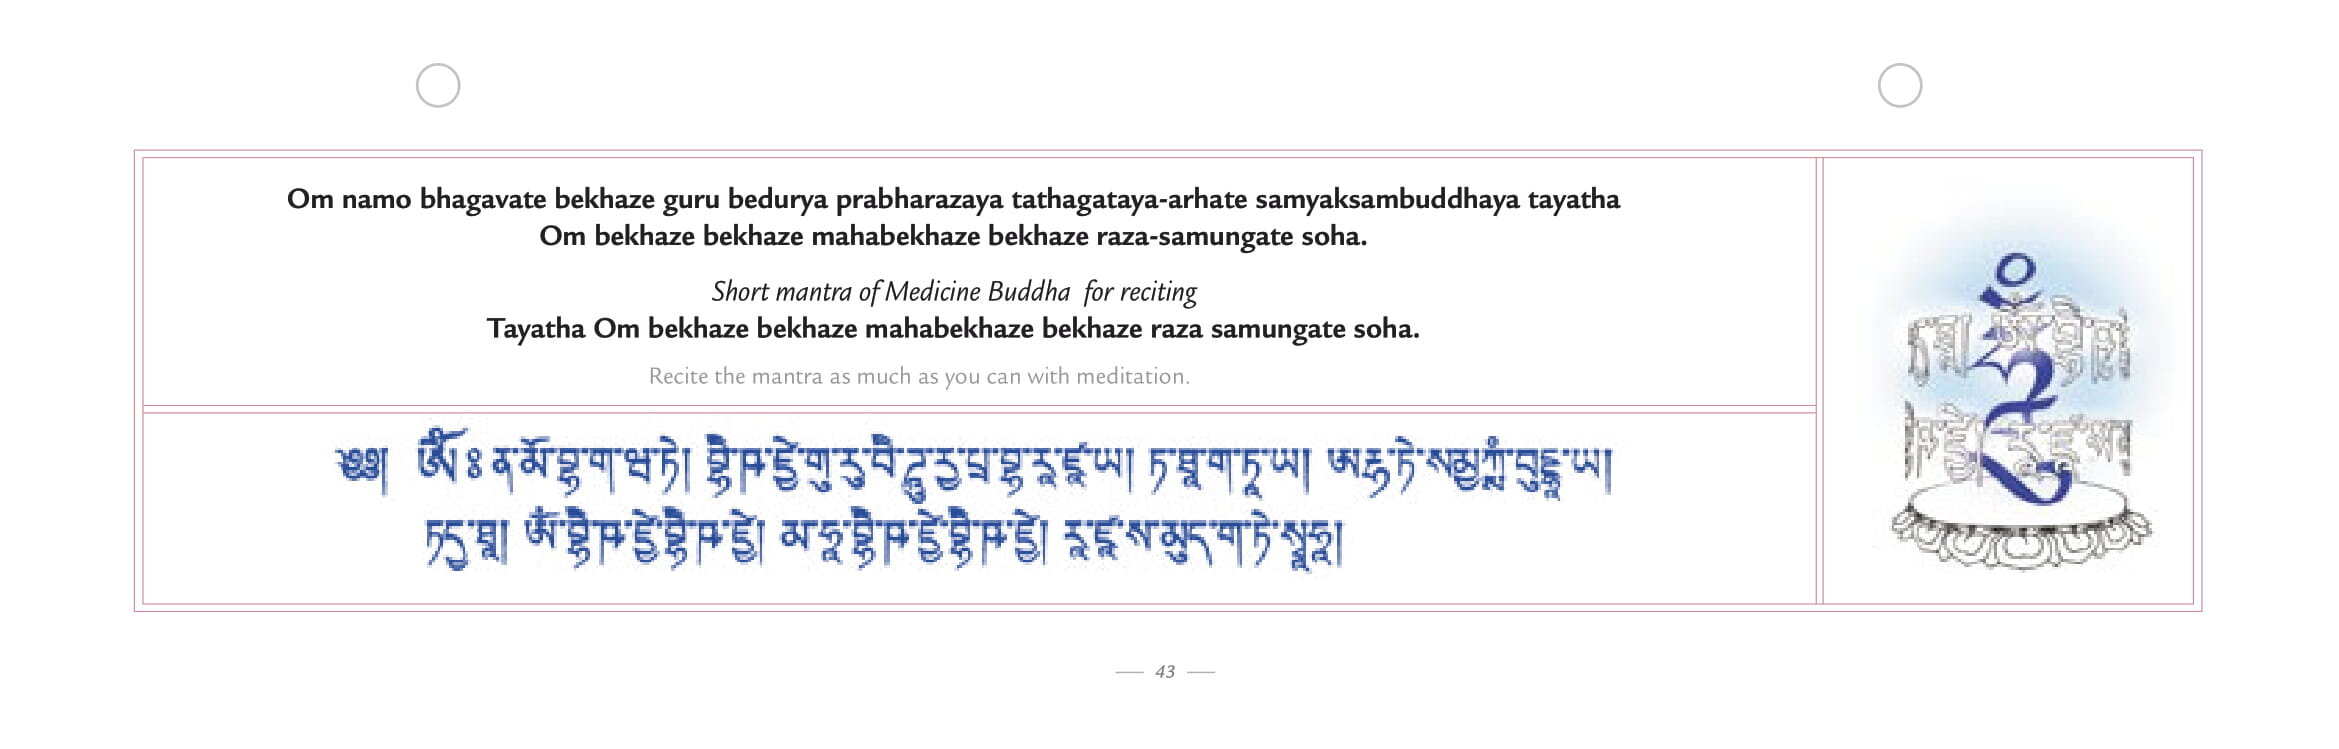 MY MEDICINE BUDDHA sadhana TIB-ENGLISH LAST VERSION copy-44.jpg